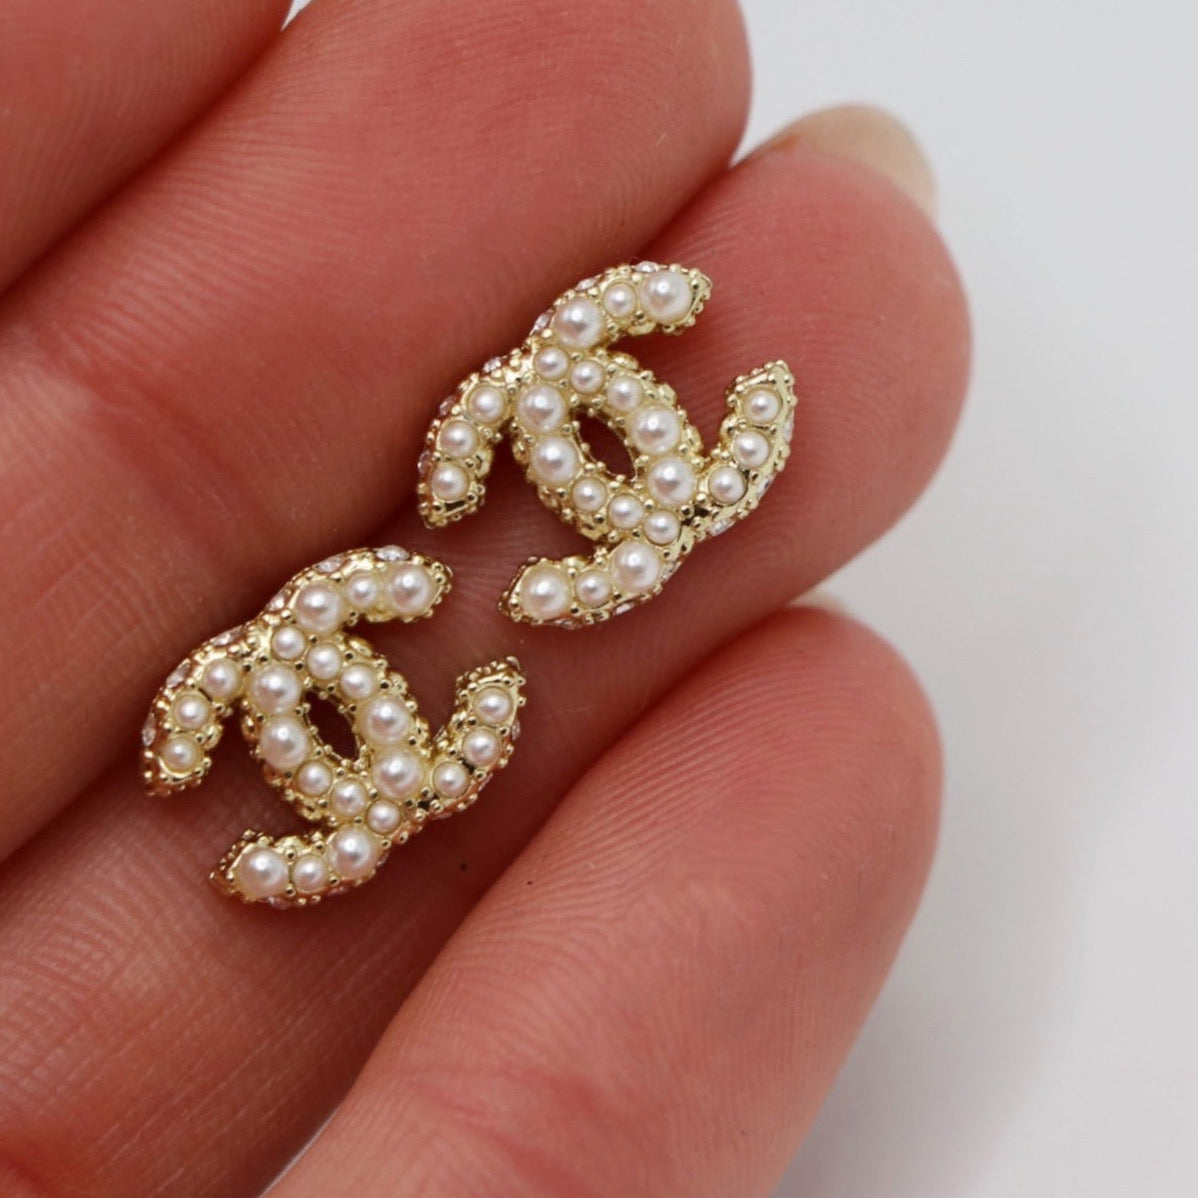 Chanel Logo CC Pearl Earrings Gold in Gold Metal - US